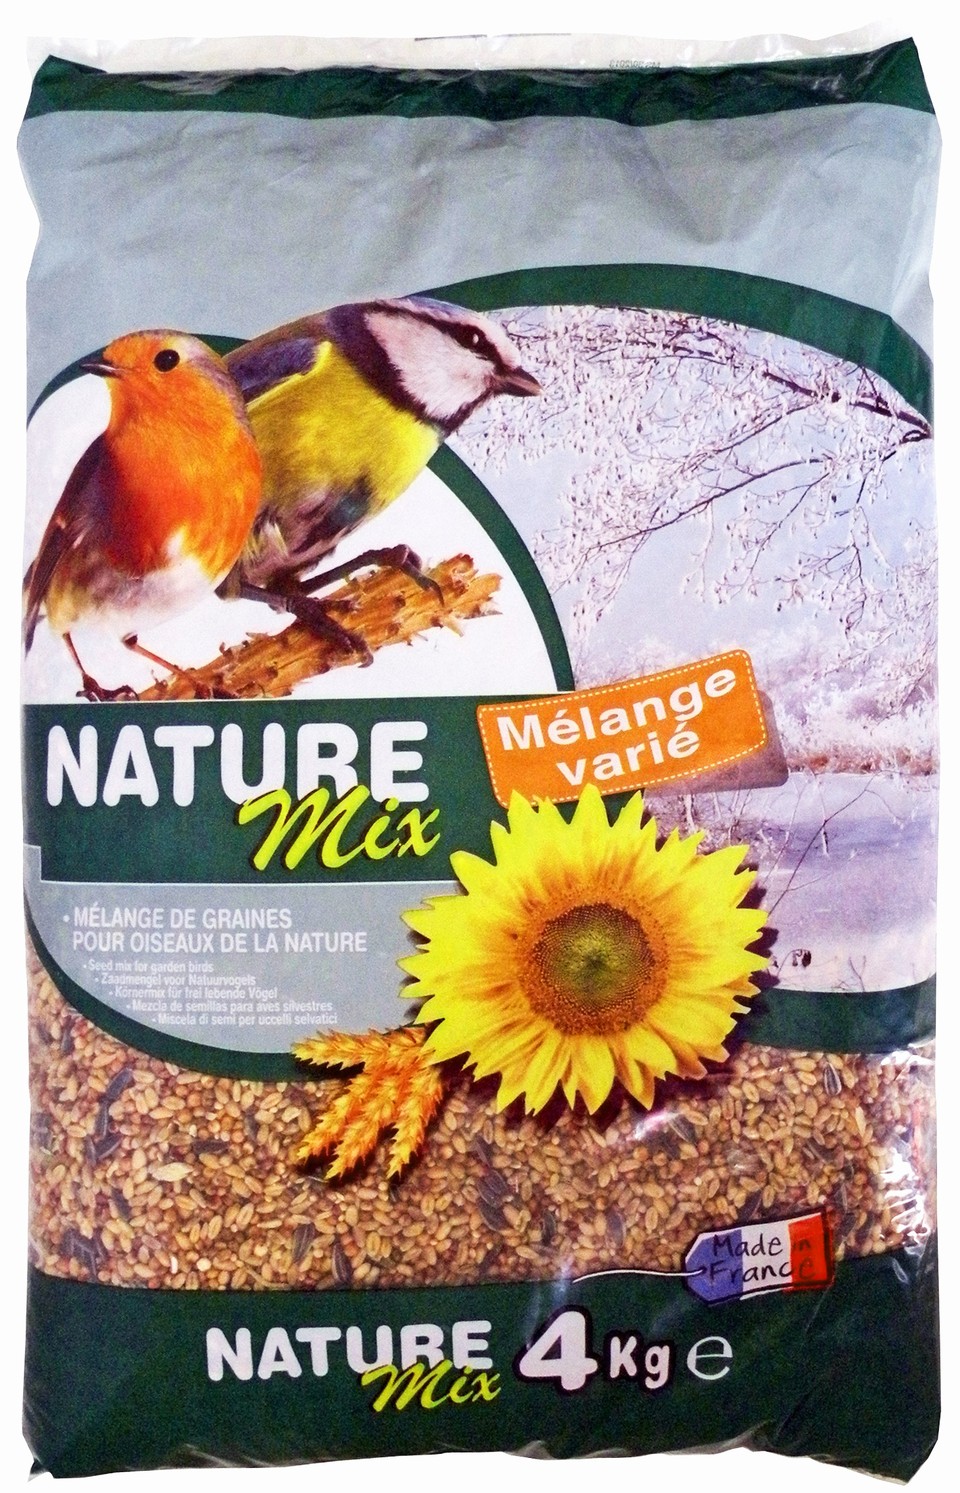 Vildfågelblandning Nature Mix 4 KG